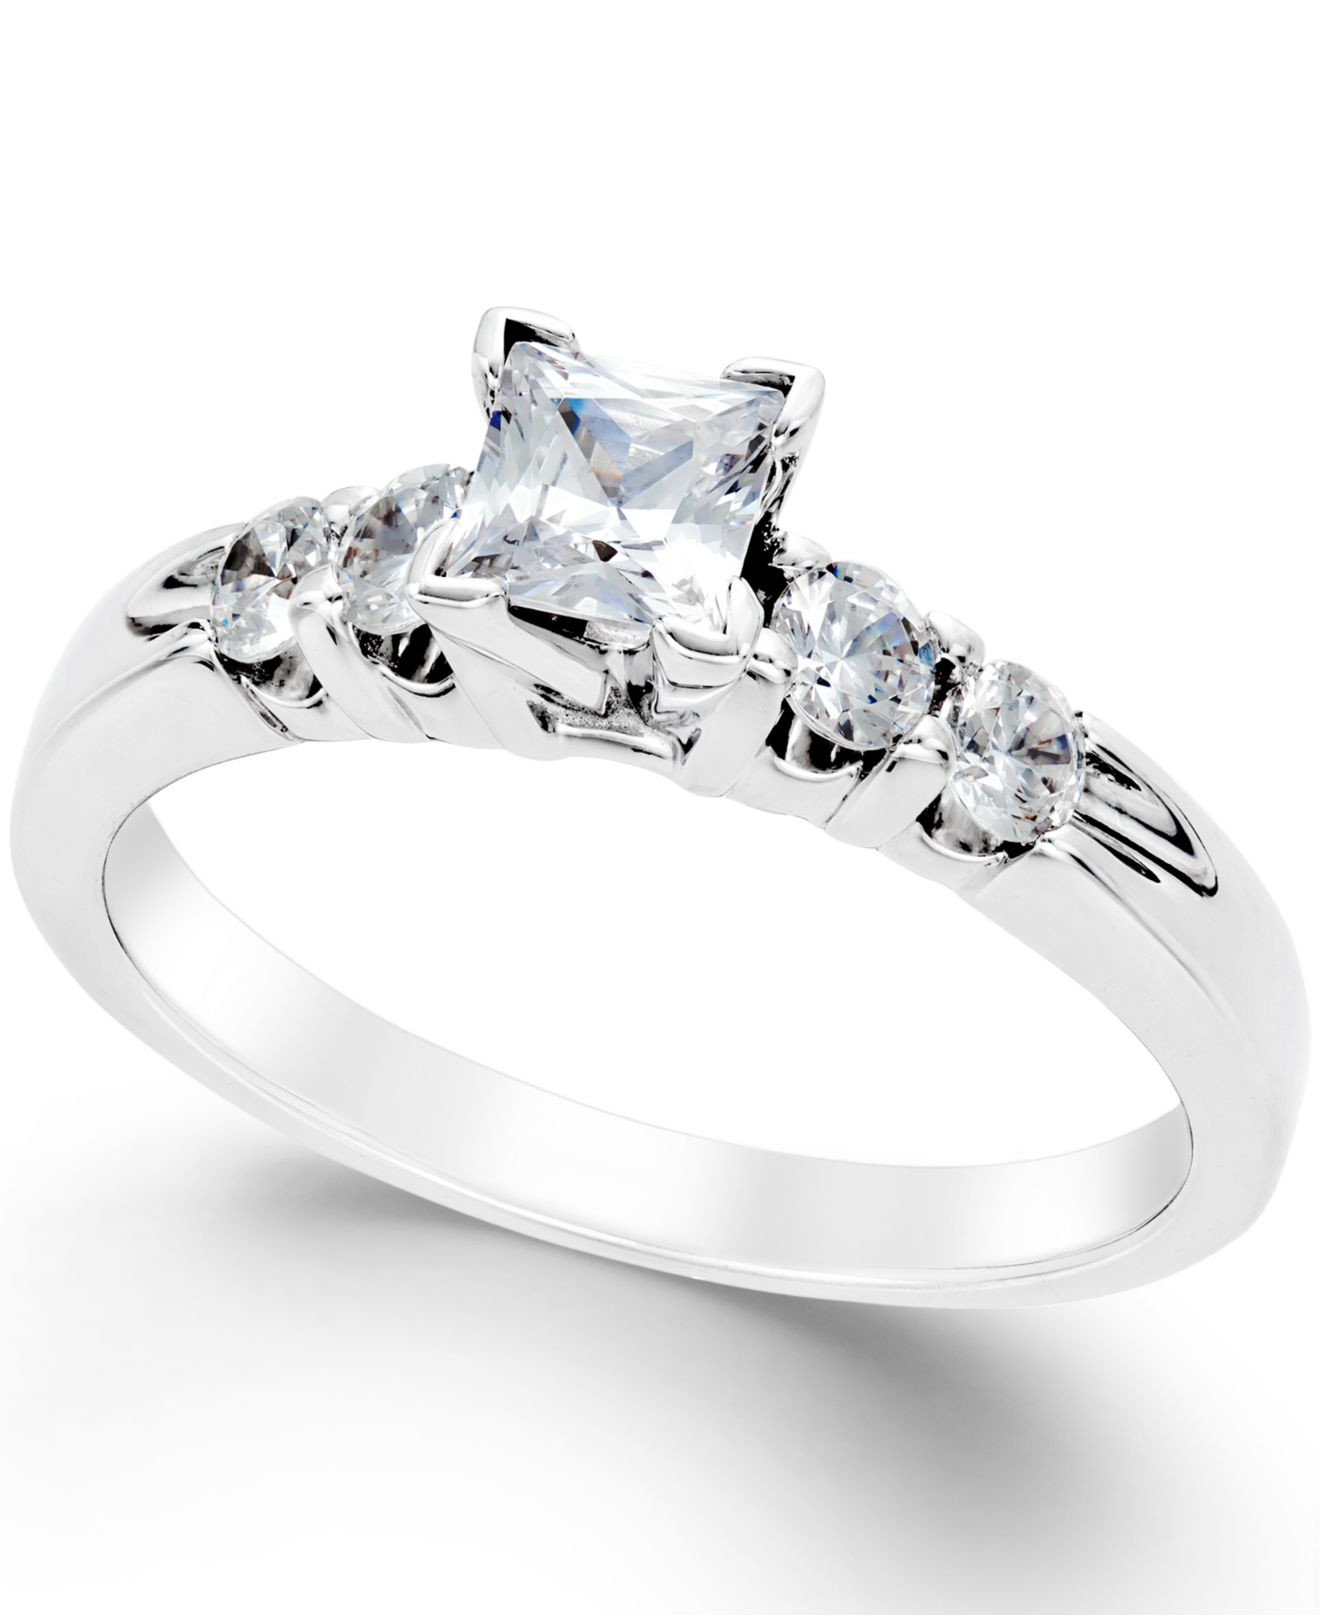 Macys Diamond Rings
 Lyst Macy s Diamond Engagement Ring 1 Ct T w In 14k